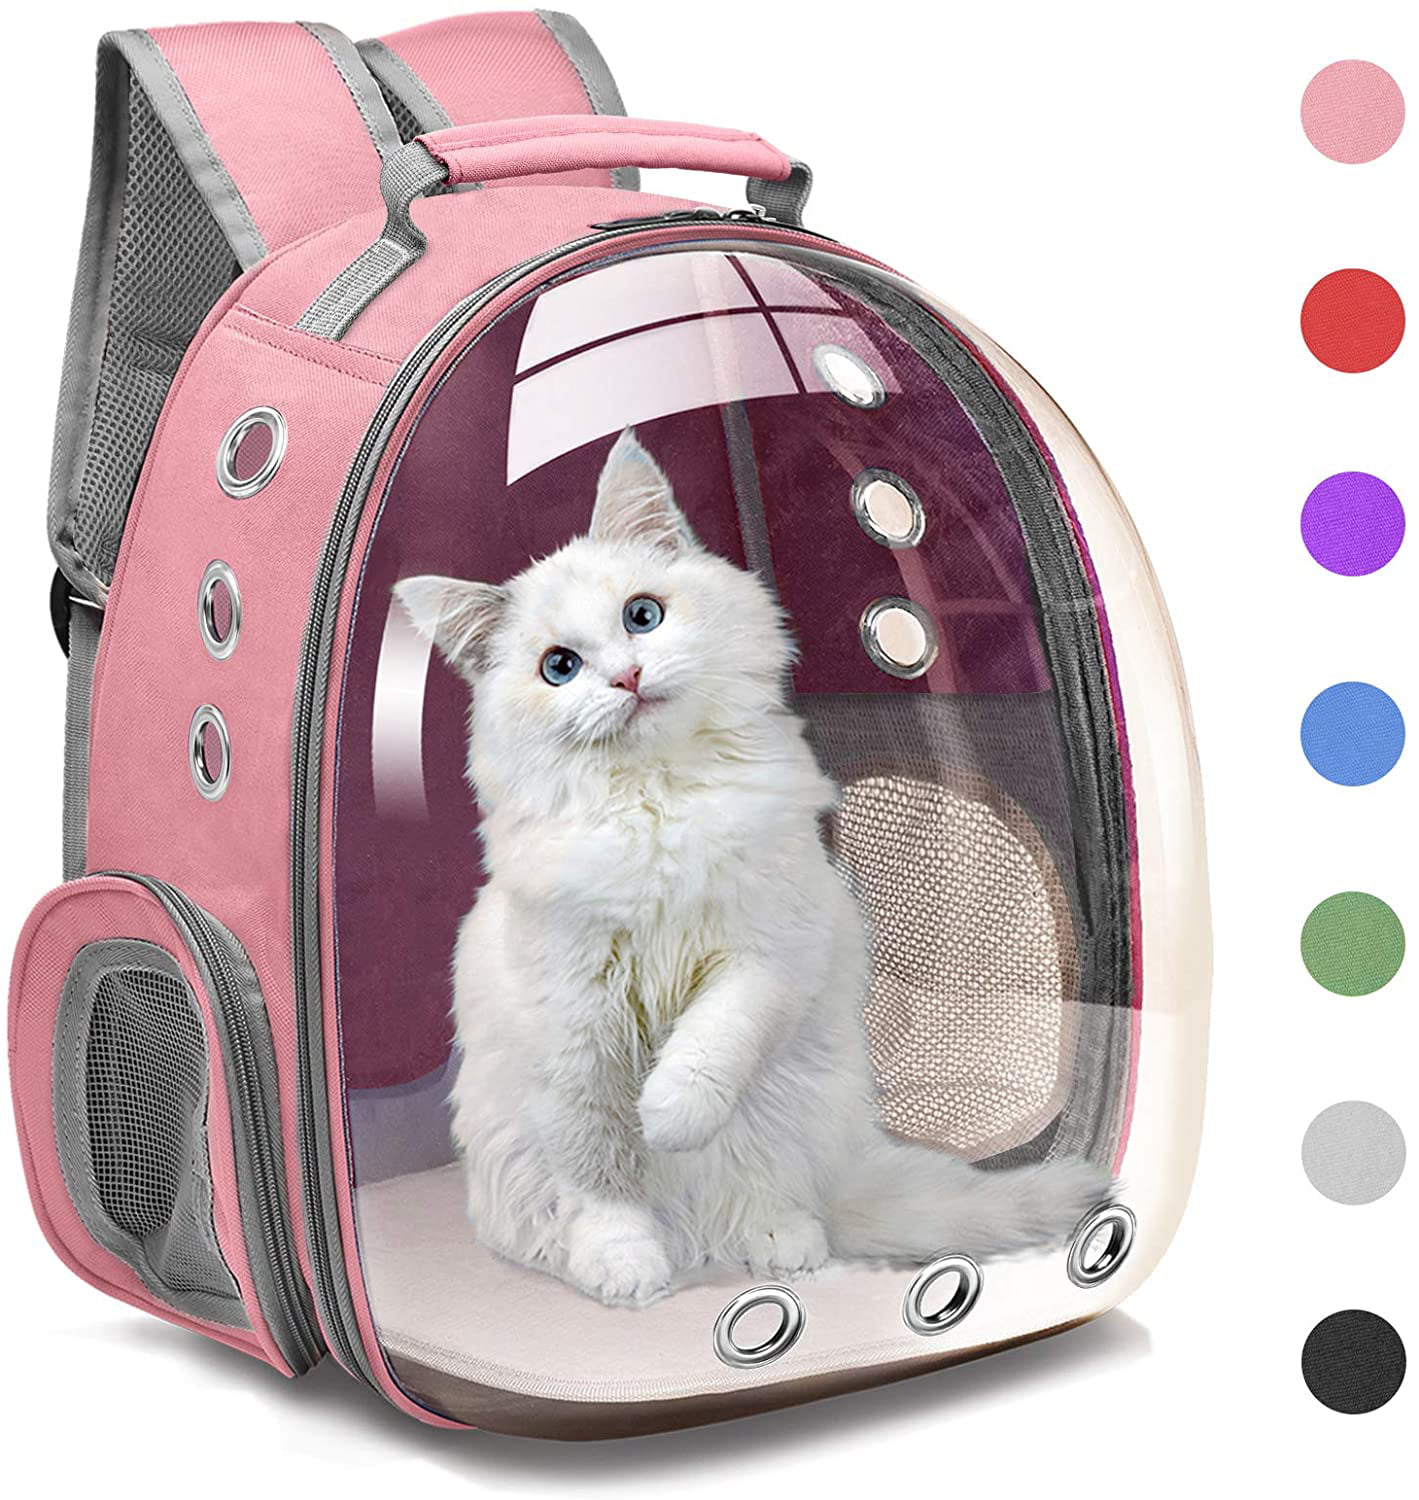 Henkelion Cat Backpack Carrier Bubble Bag, Small Dog Backpack Carrier